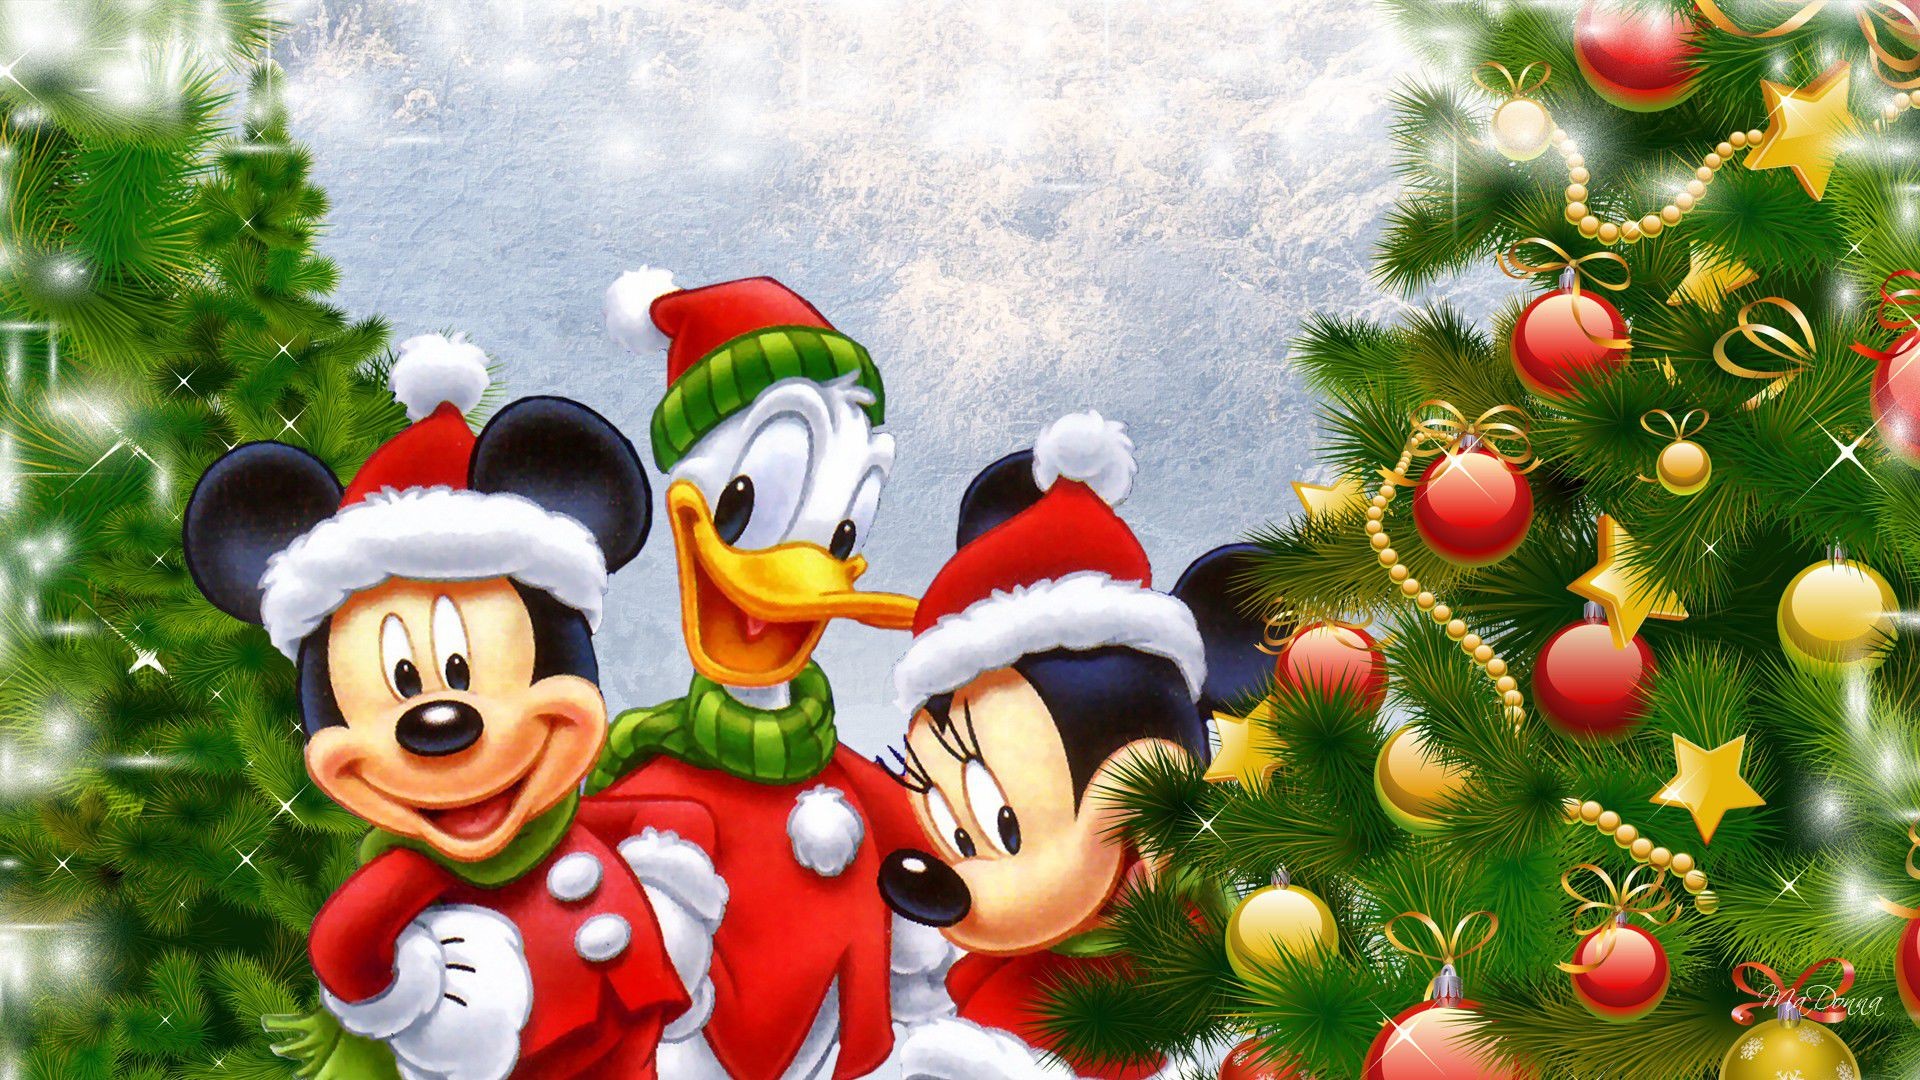 Disney christmas desktop wallpapers free download